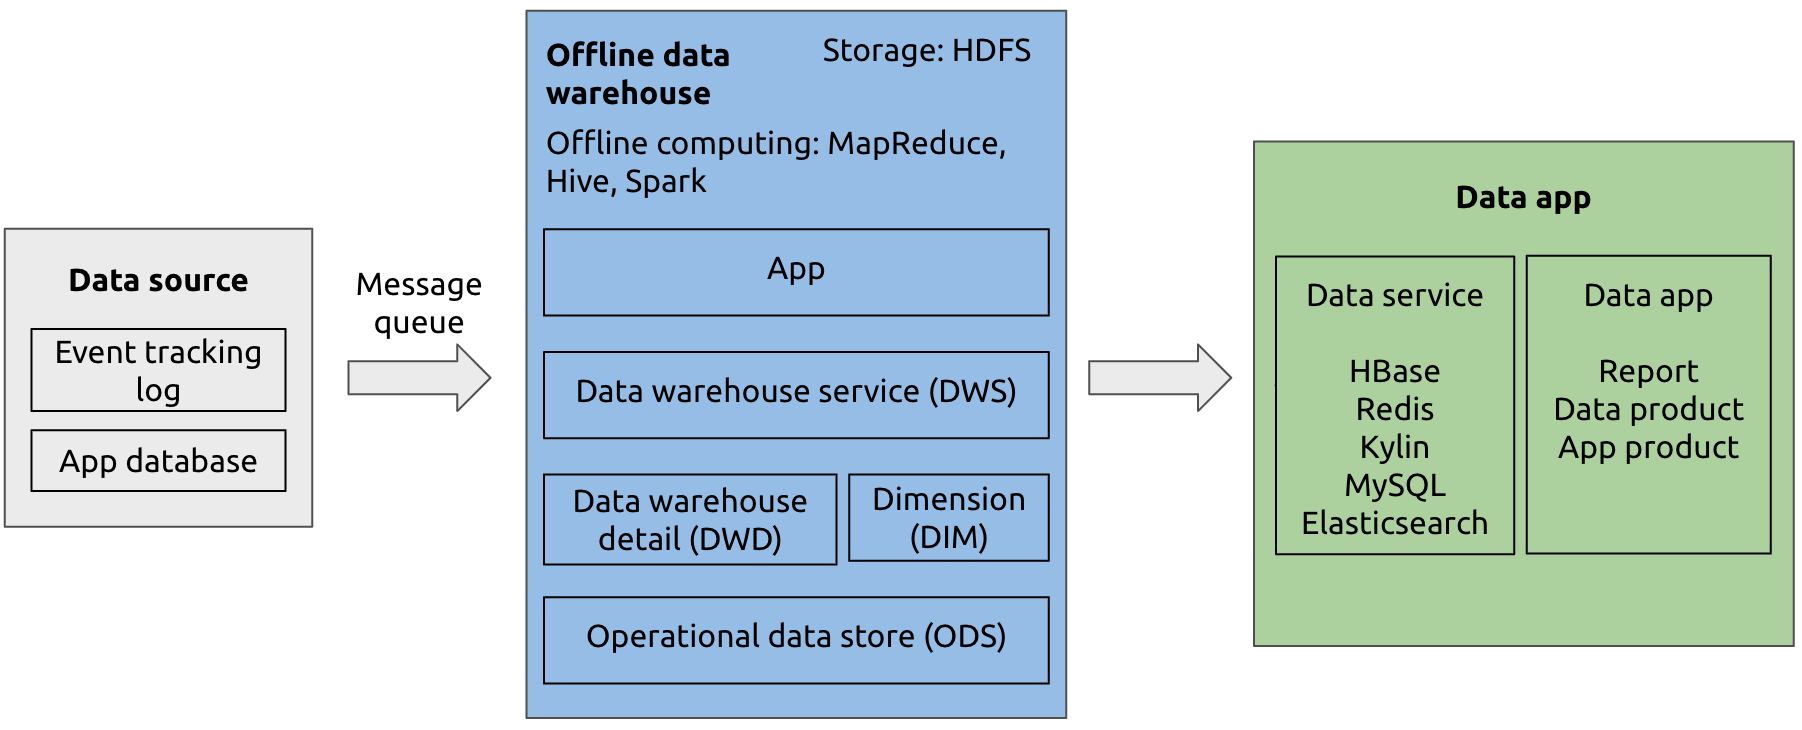 An offline data warehouse architecture